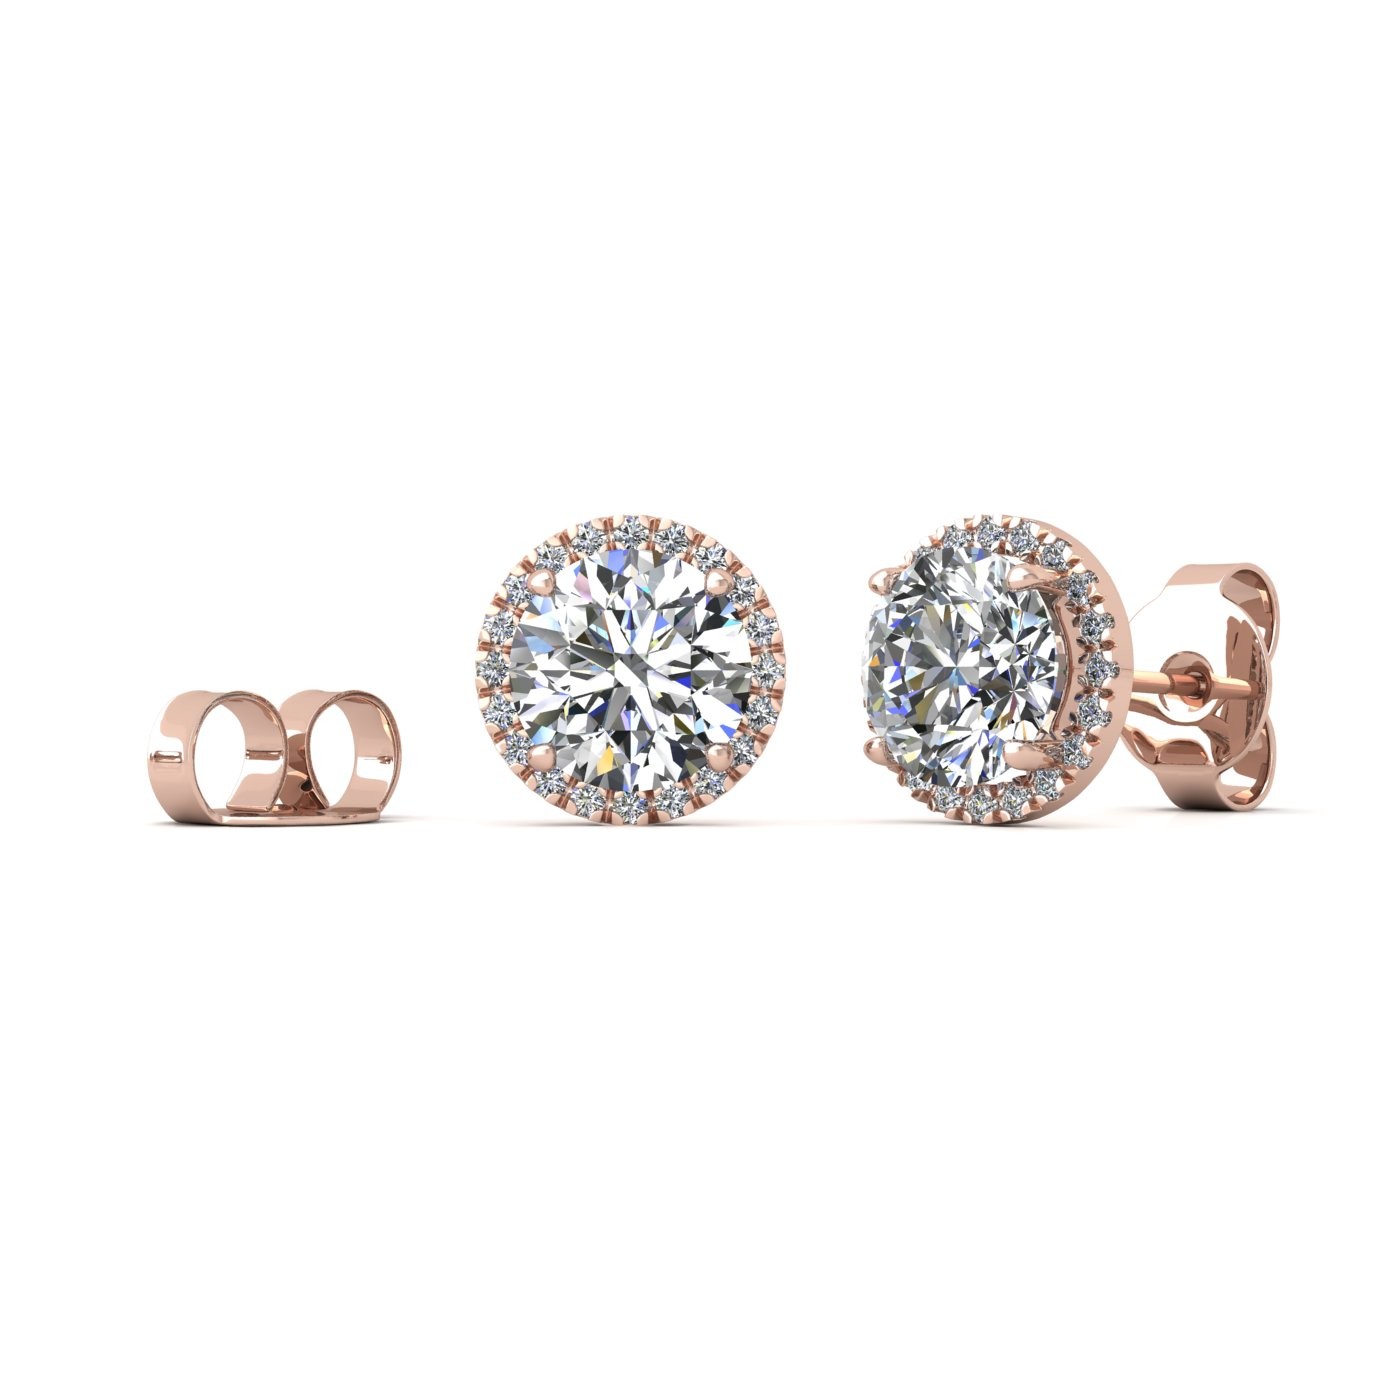 18k rose gold  0,3 ct each (0,6 tcw) 4 prongs round shape diamond earrings with diamond pavÉ set halo Photos & images